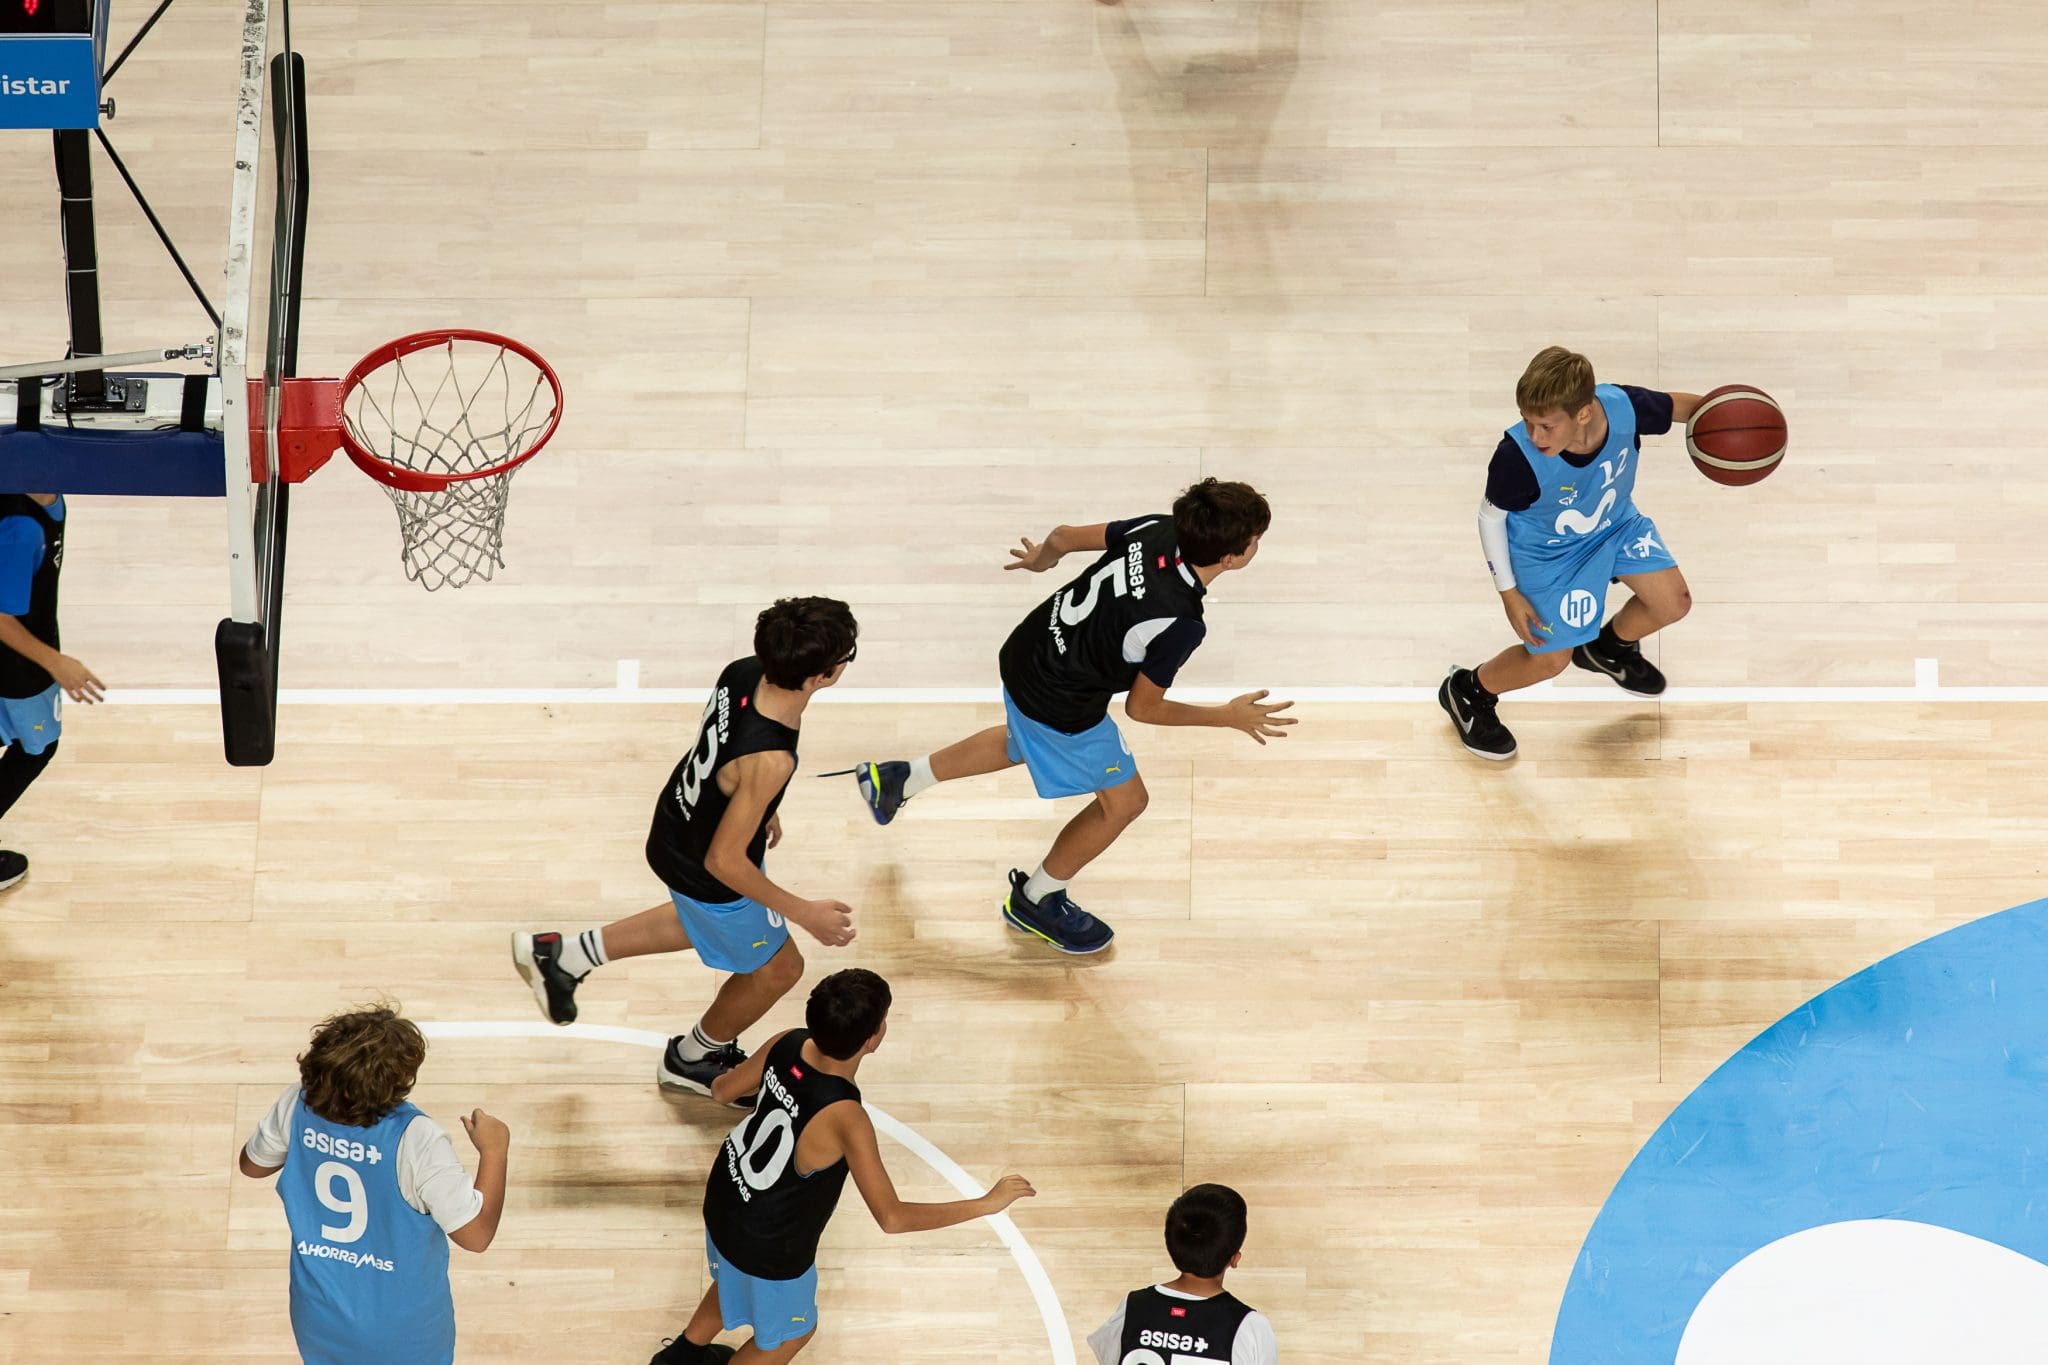 esculpir Verter Anuncio Entre ventanas FIBA, la cantera continua | Movistar Estudiantes